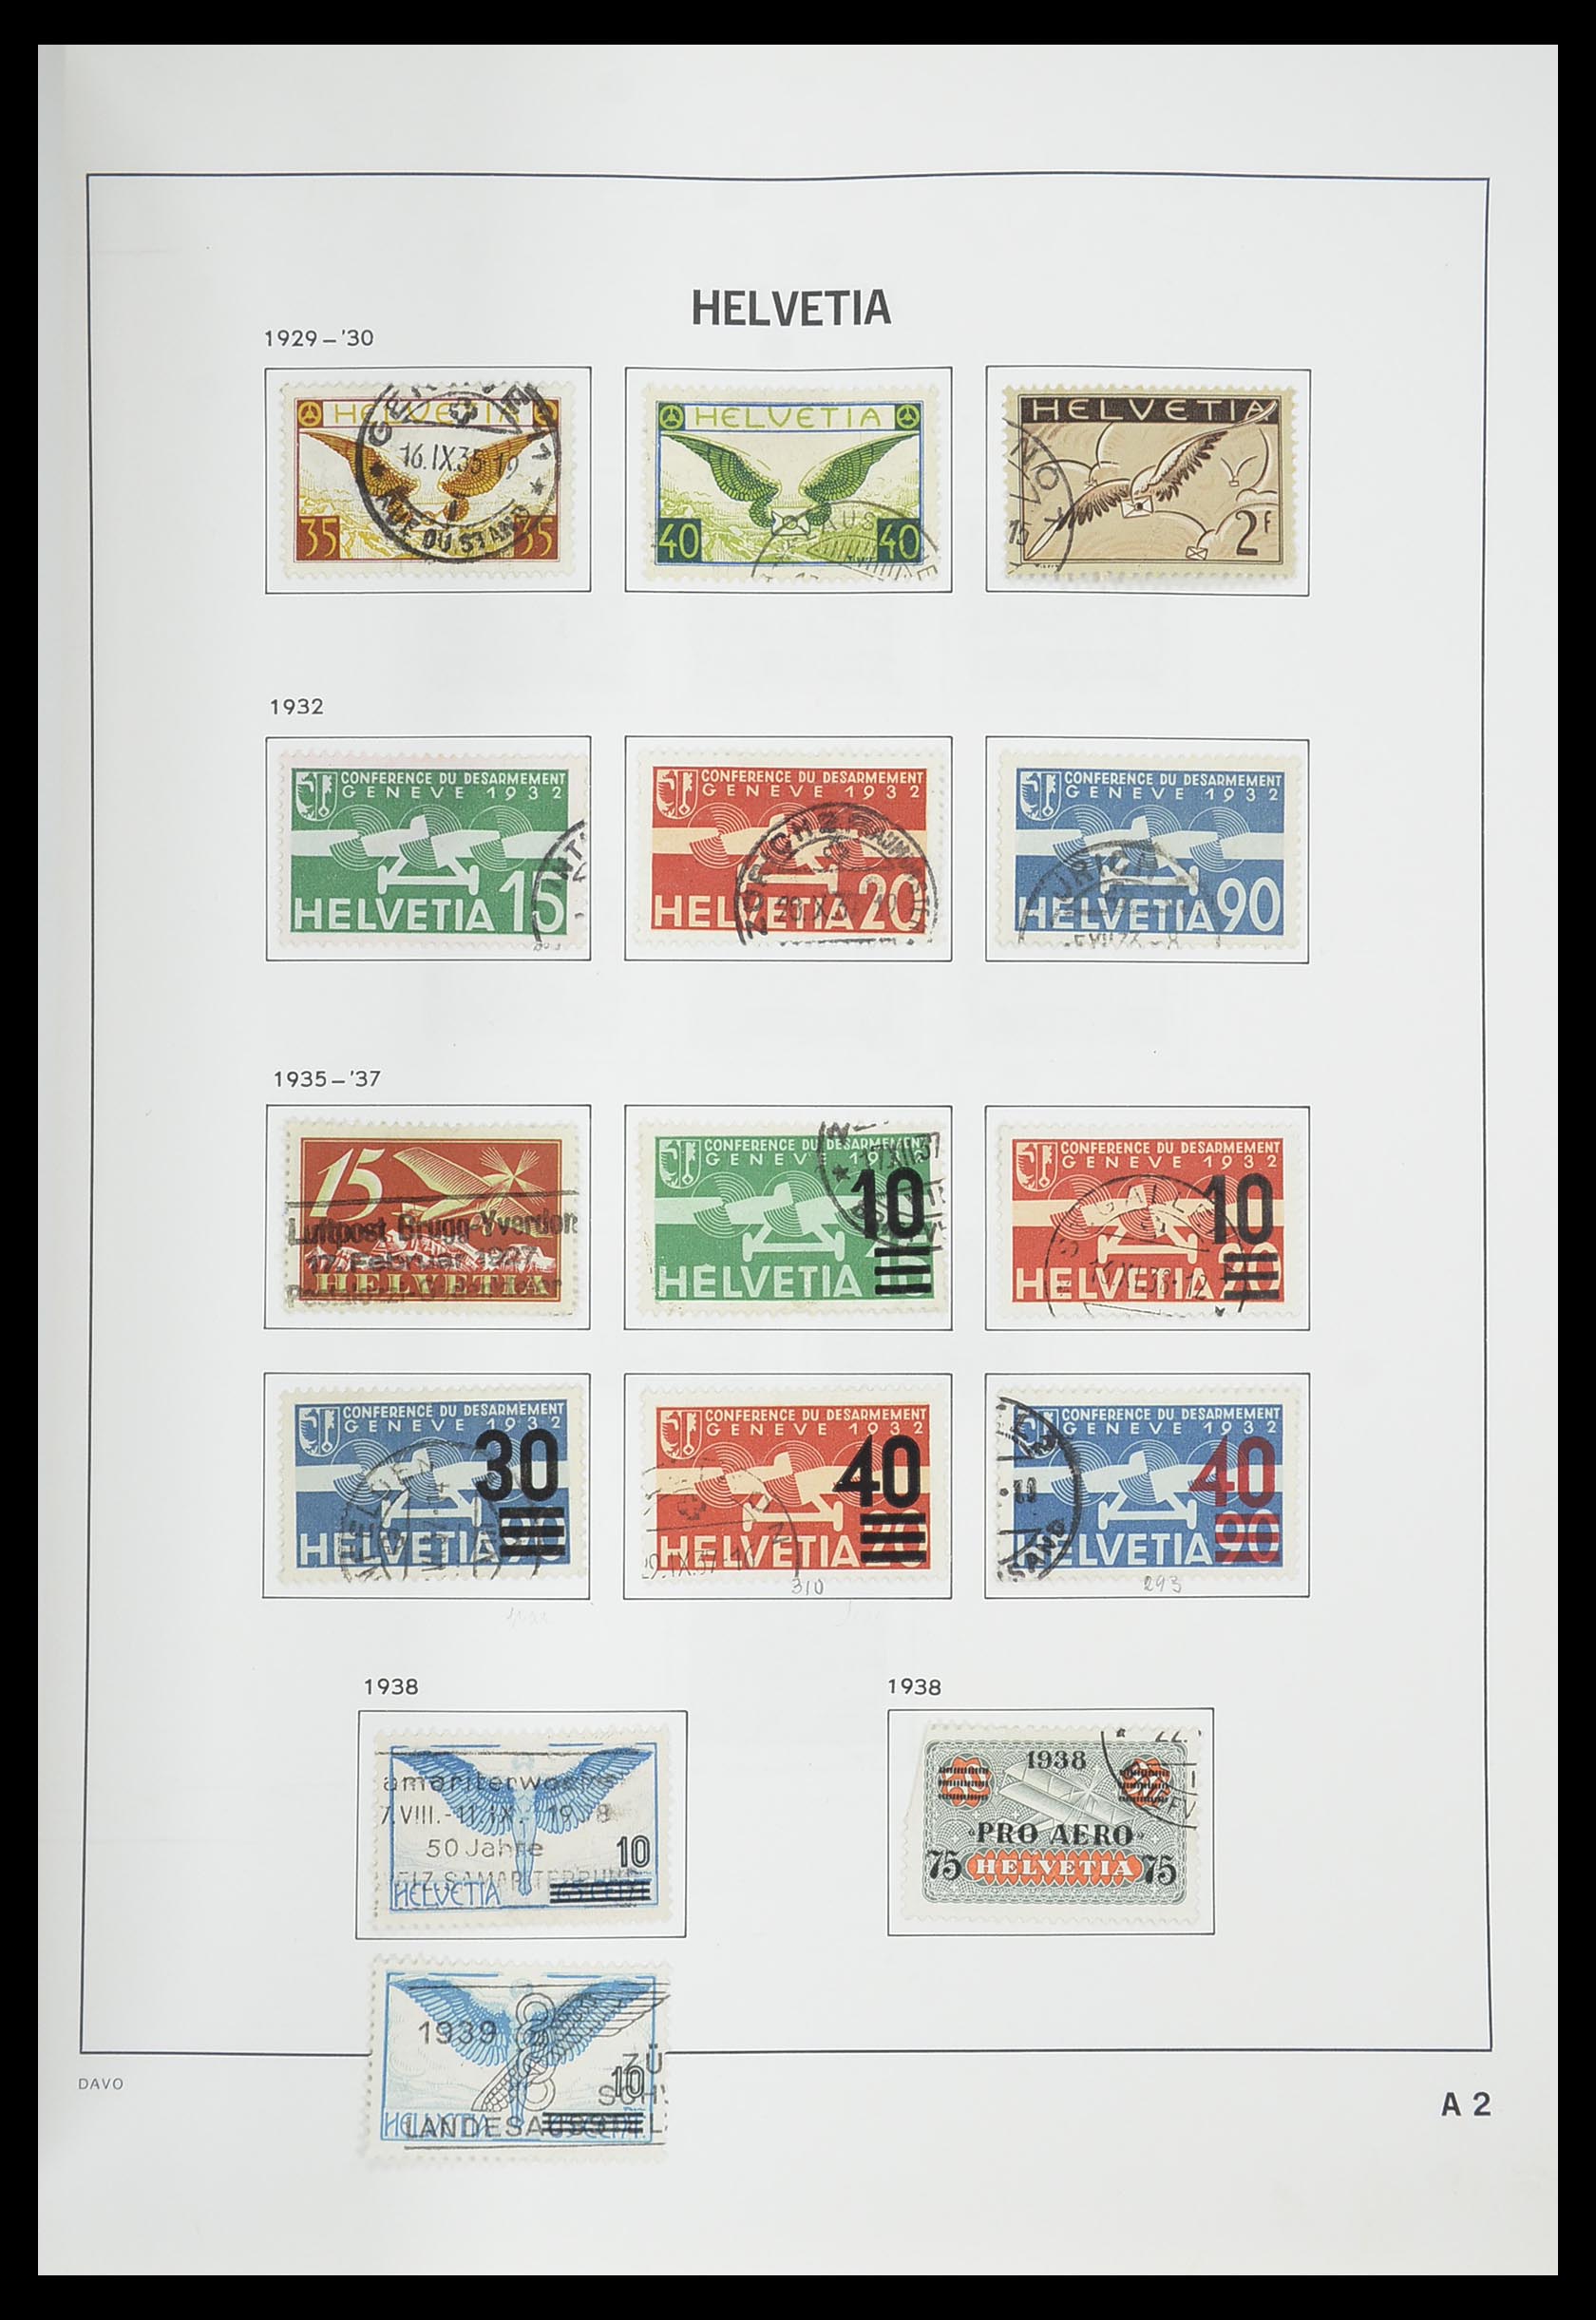 33559 130 - Stamp collection 33559 Switzerland 1850-2000.